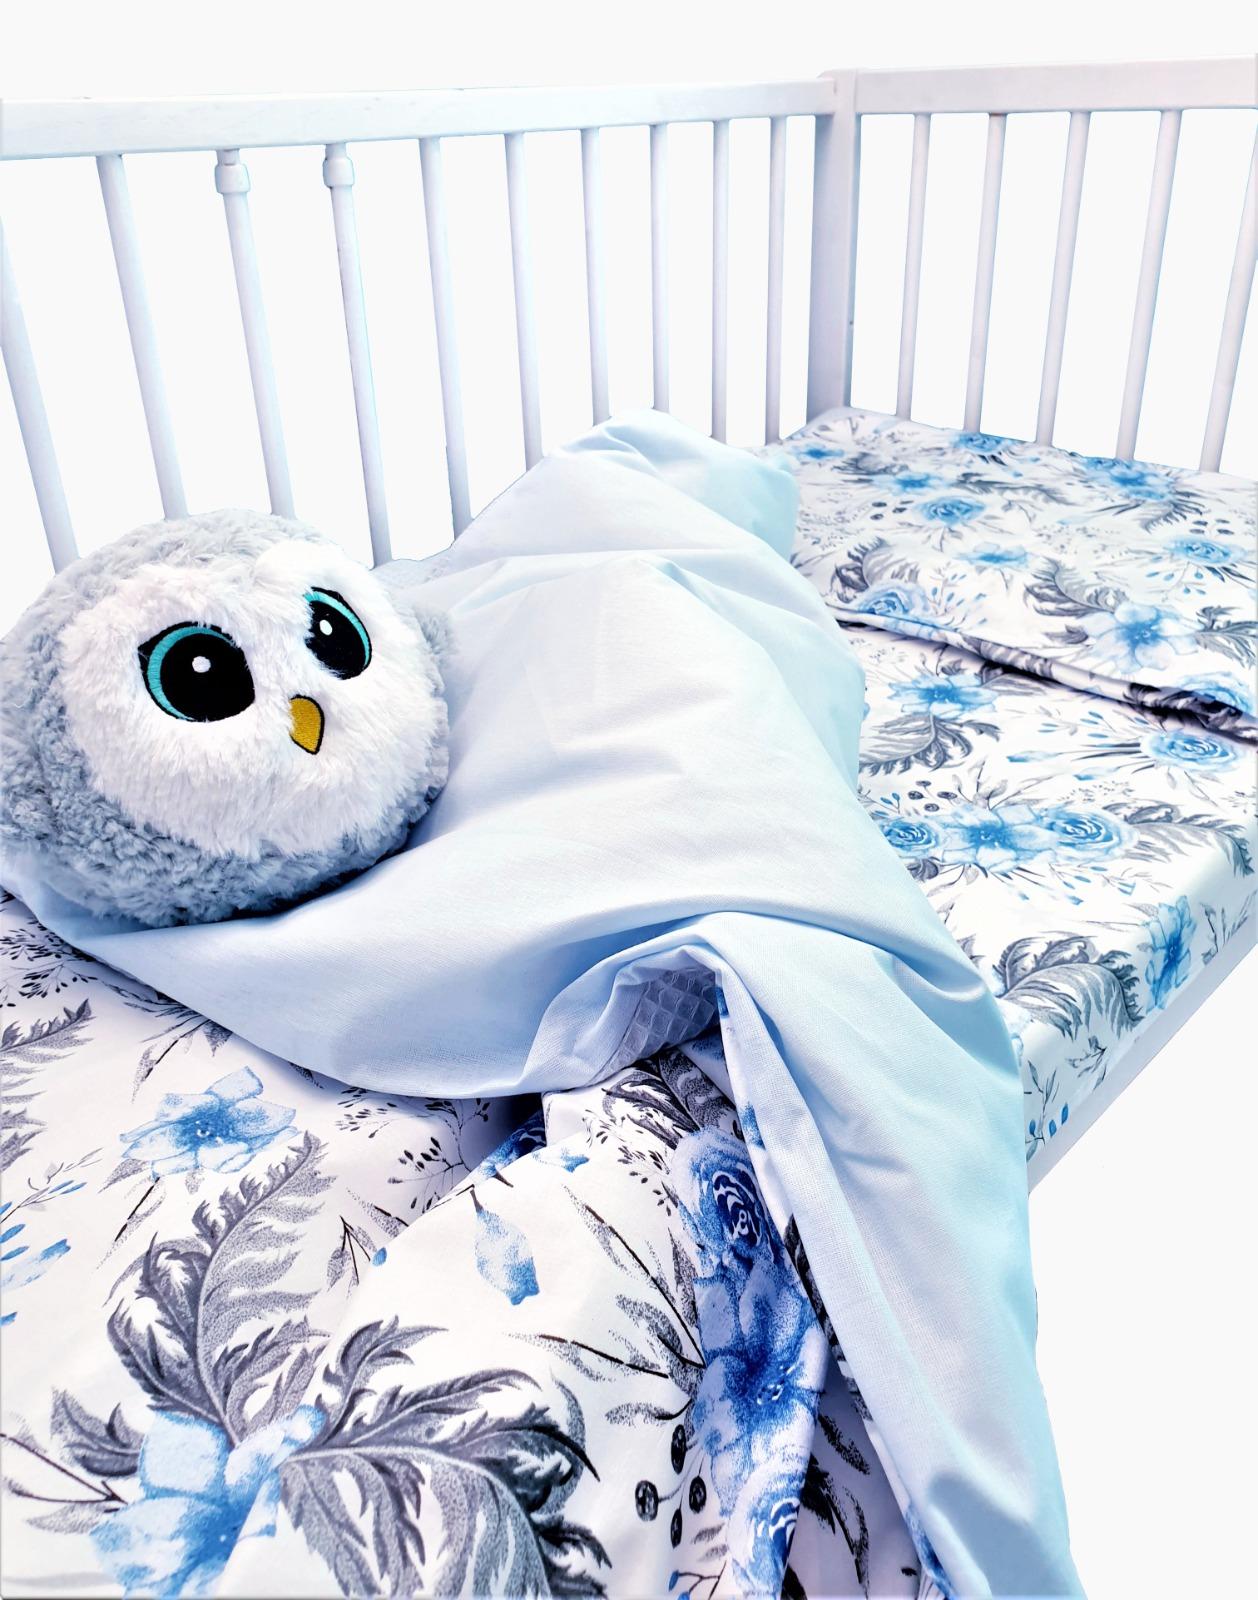 4in1 children's bedding set - blue rose and fern